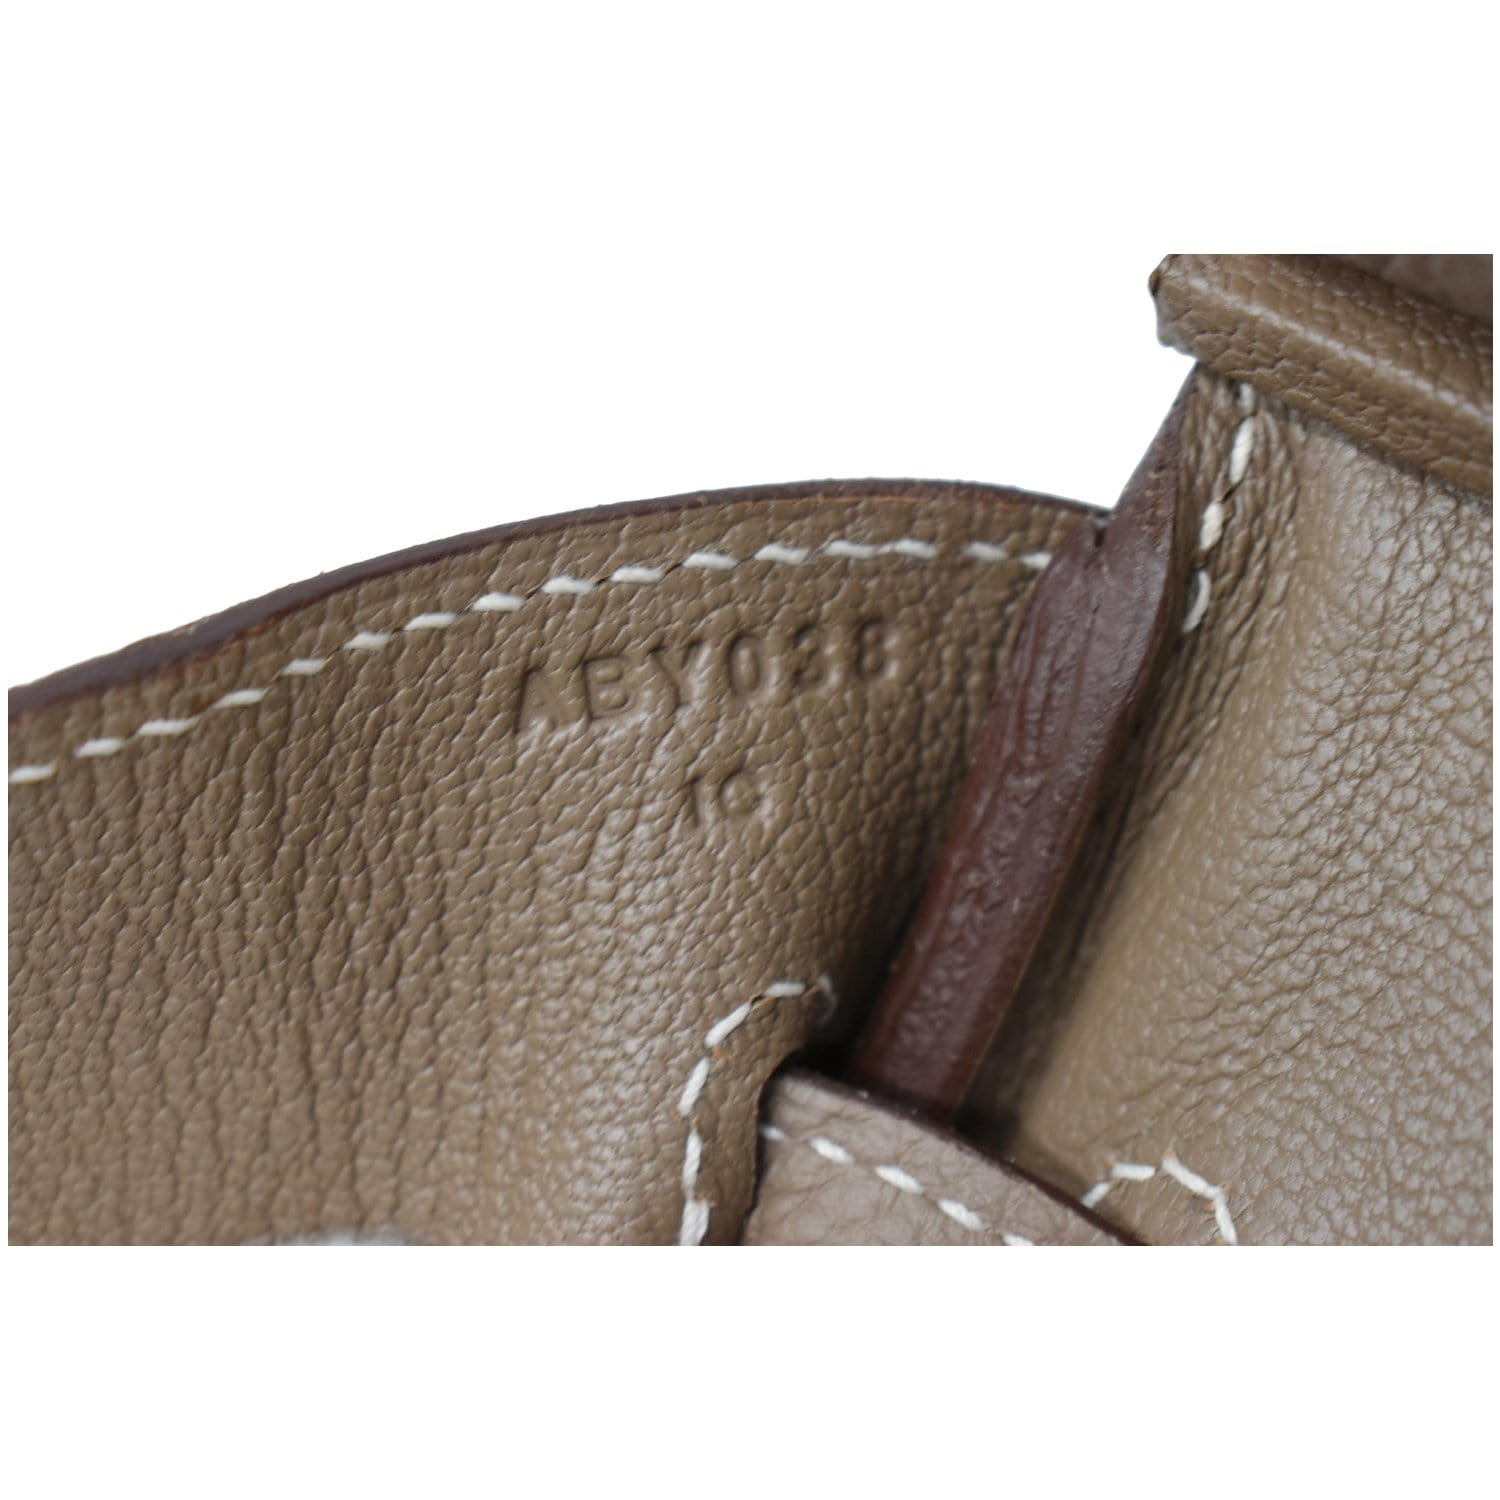 Hermès Birkin 25 cm Handbag in Grey Togo Leather